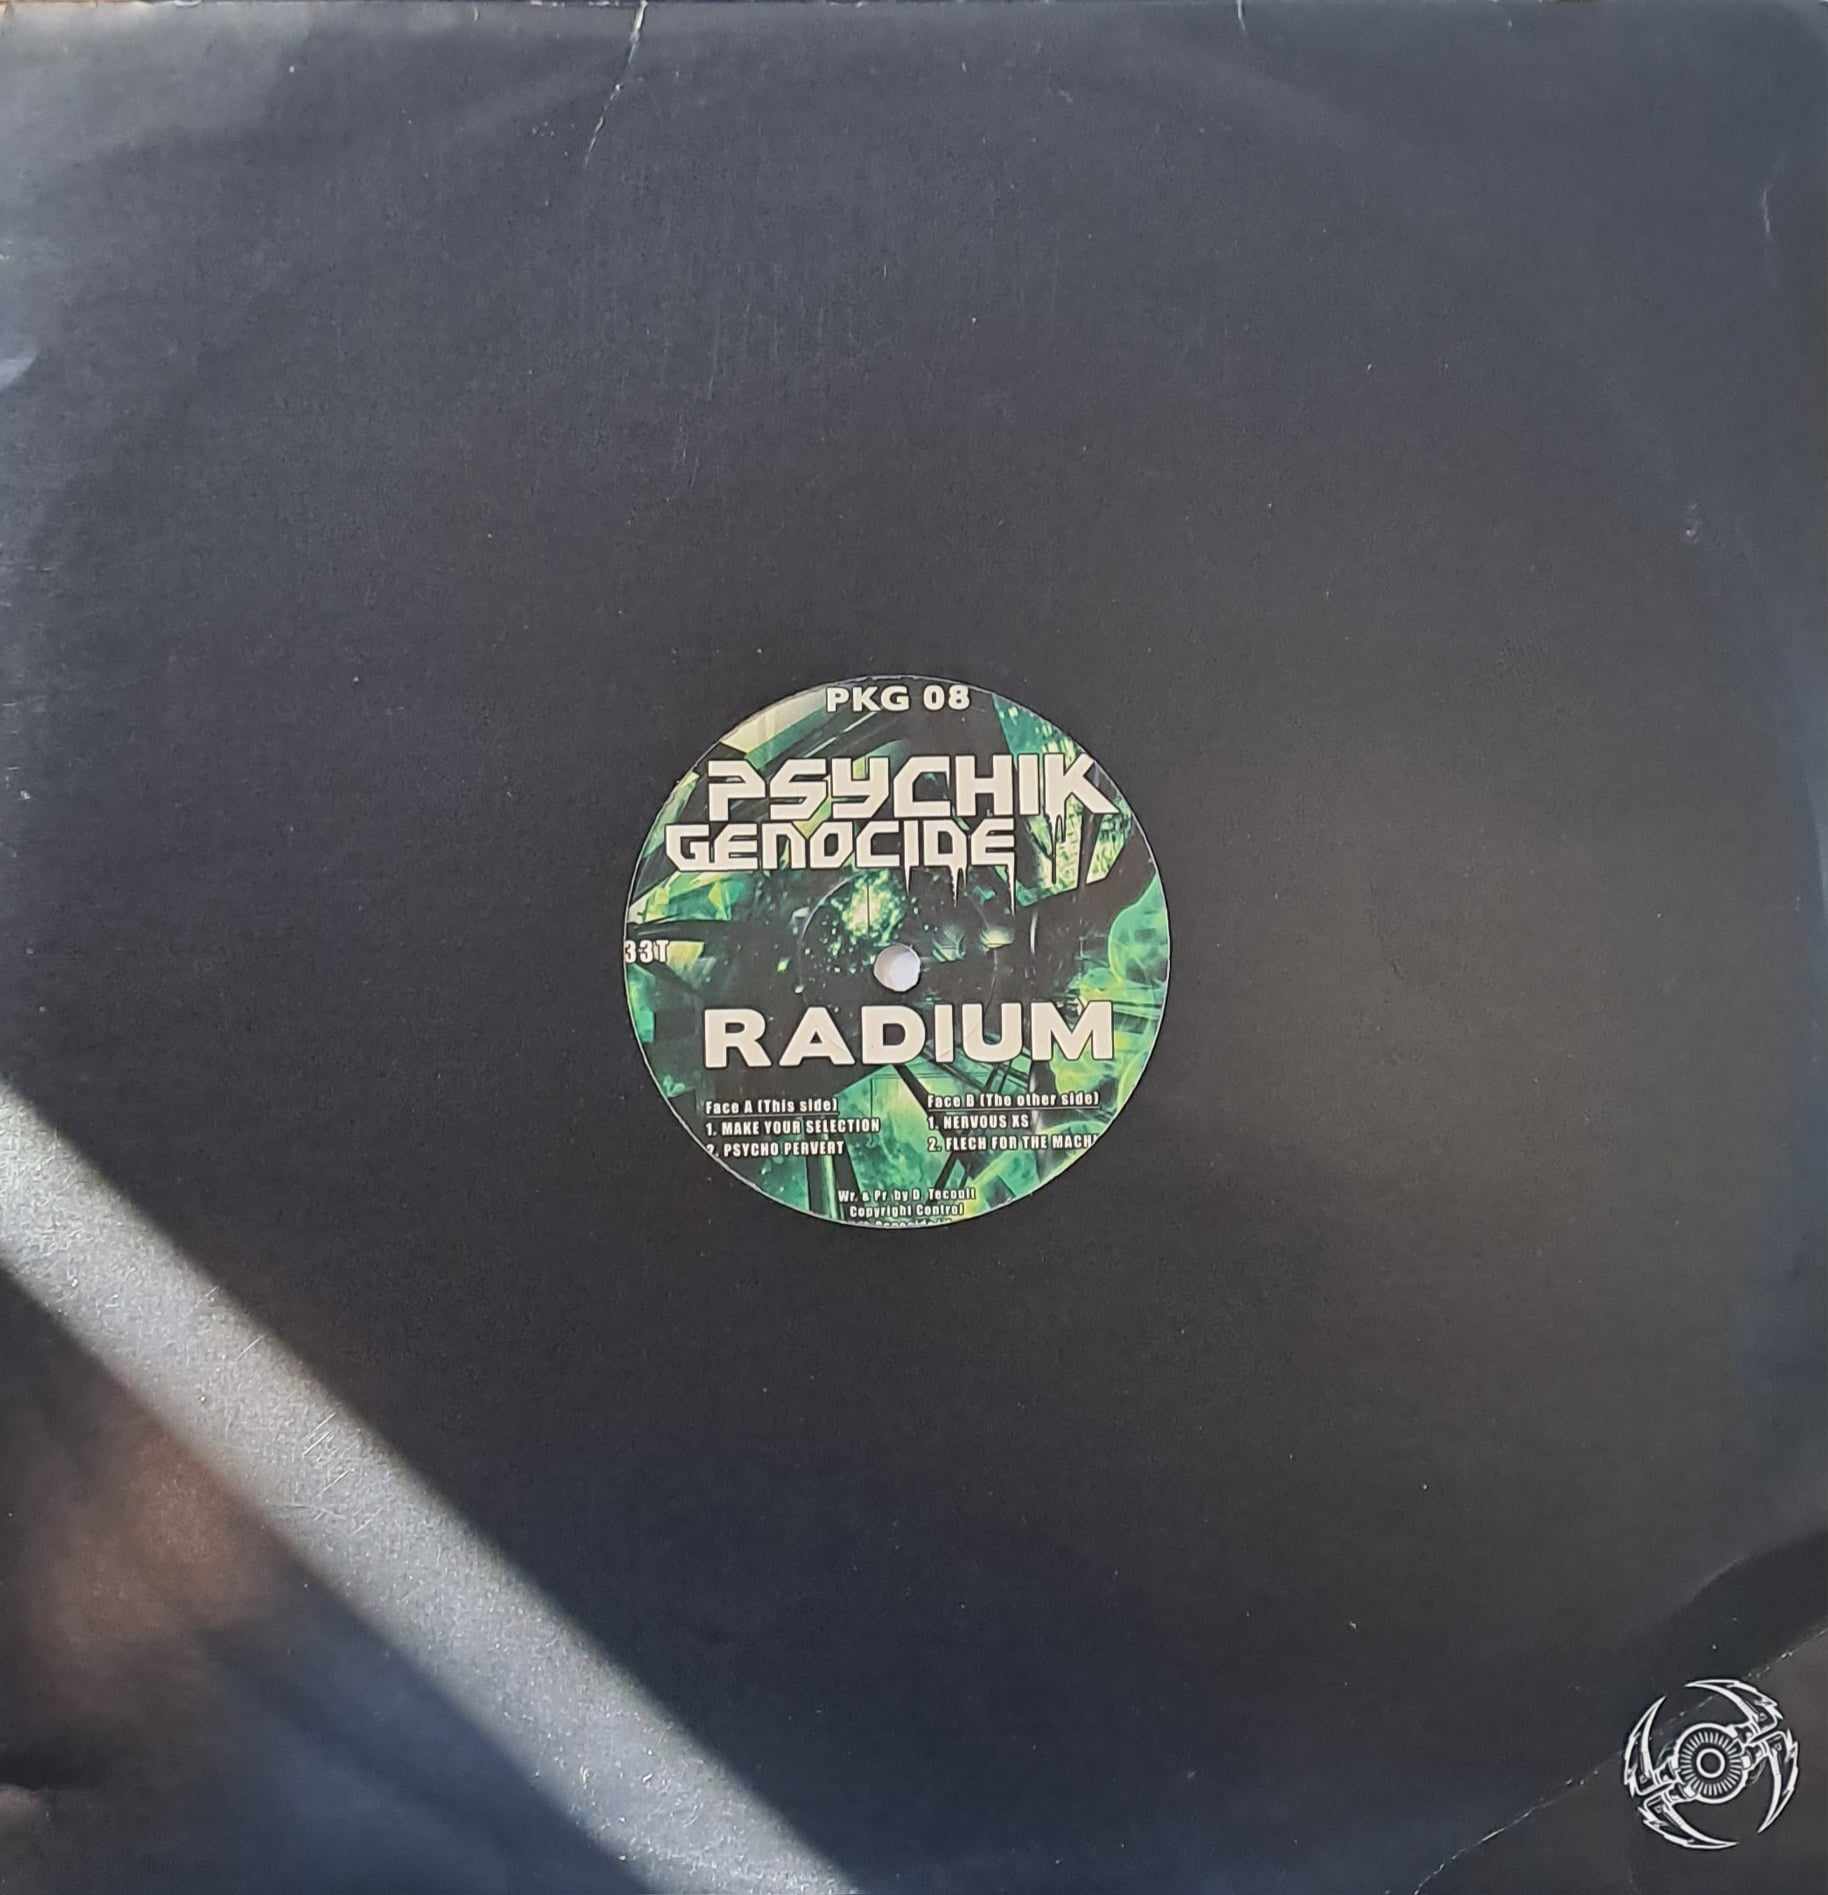 Psychik Genocide 08 RP - vinyle hardcore